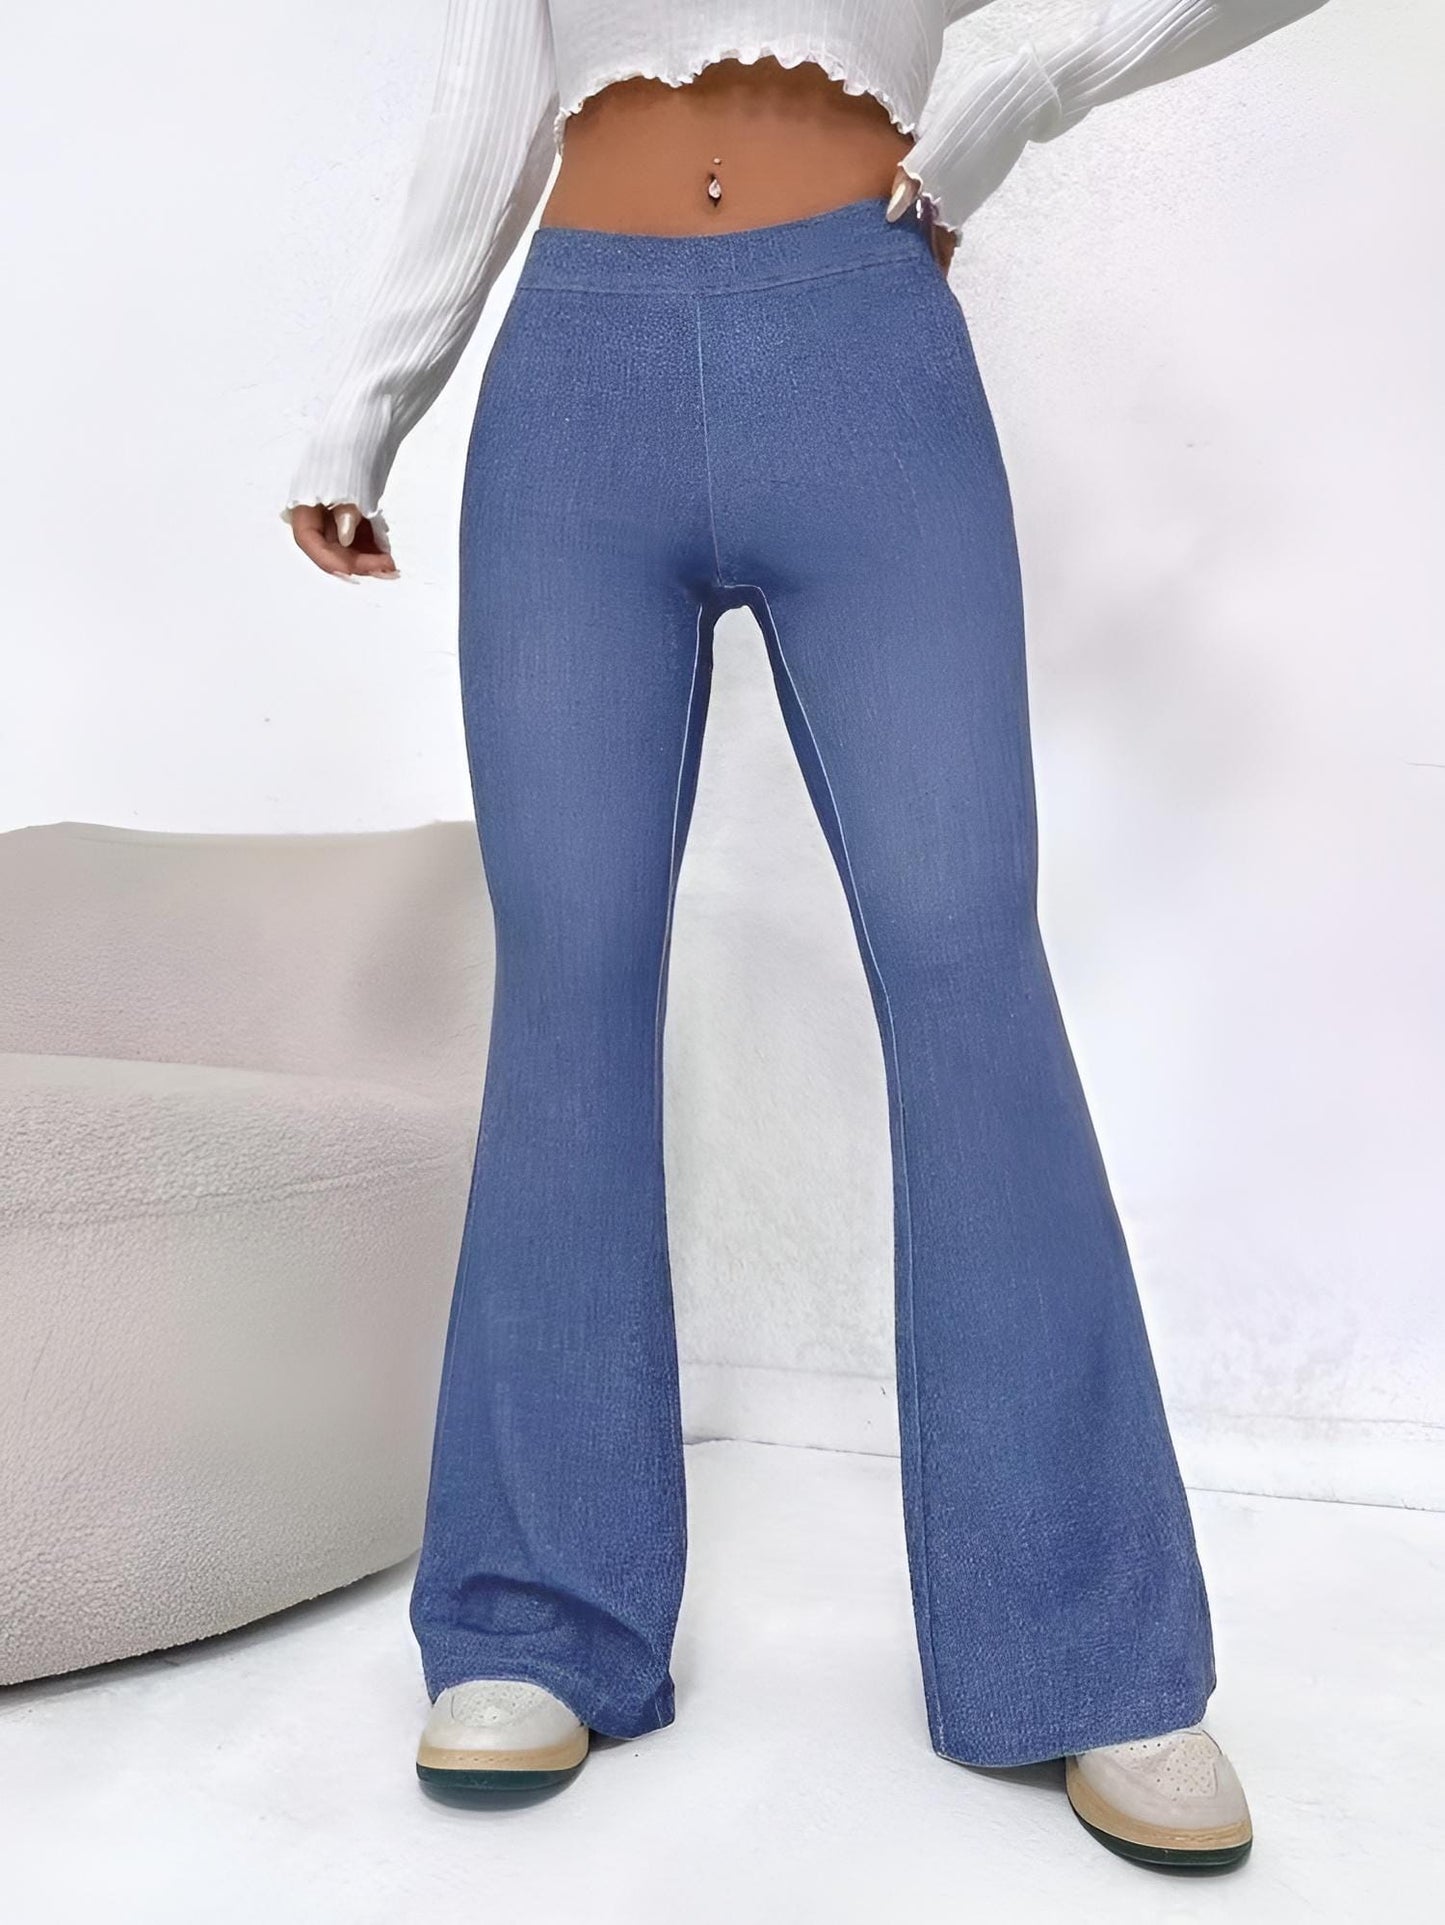 Pantalone Donna Jeans Denim Elastico Zampa Casual Comodo Easy - LE STYLE DE PARIS